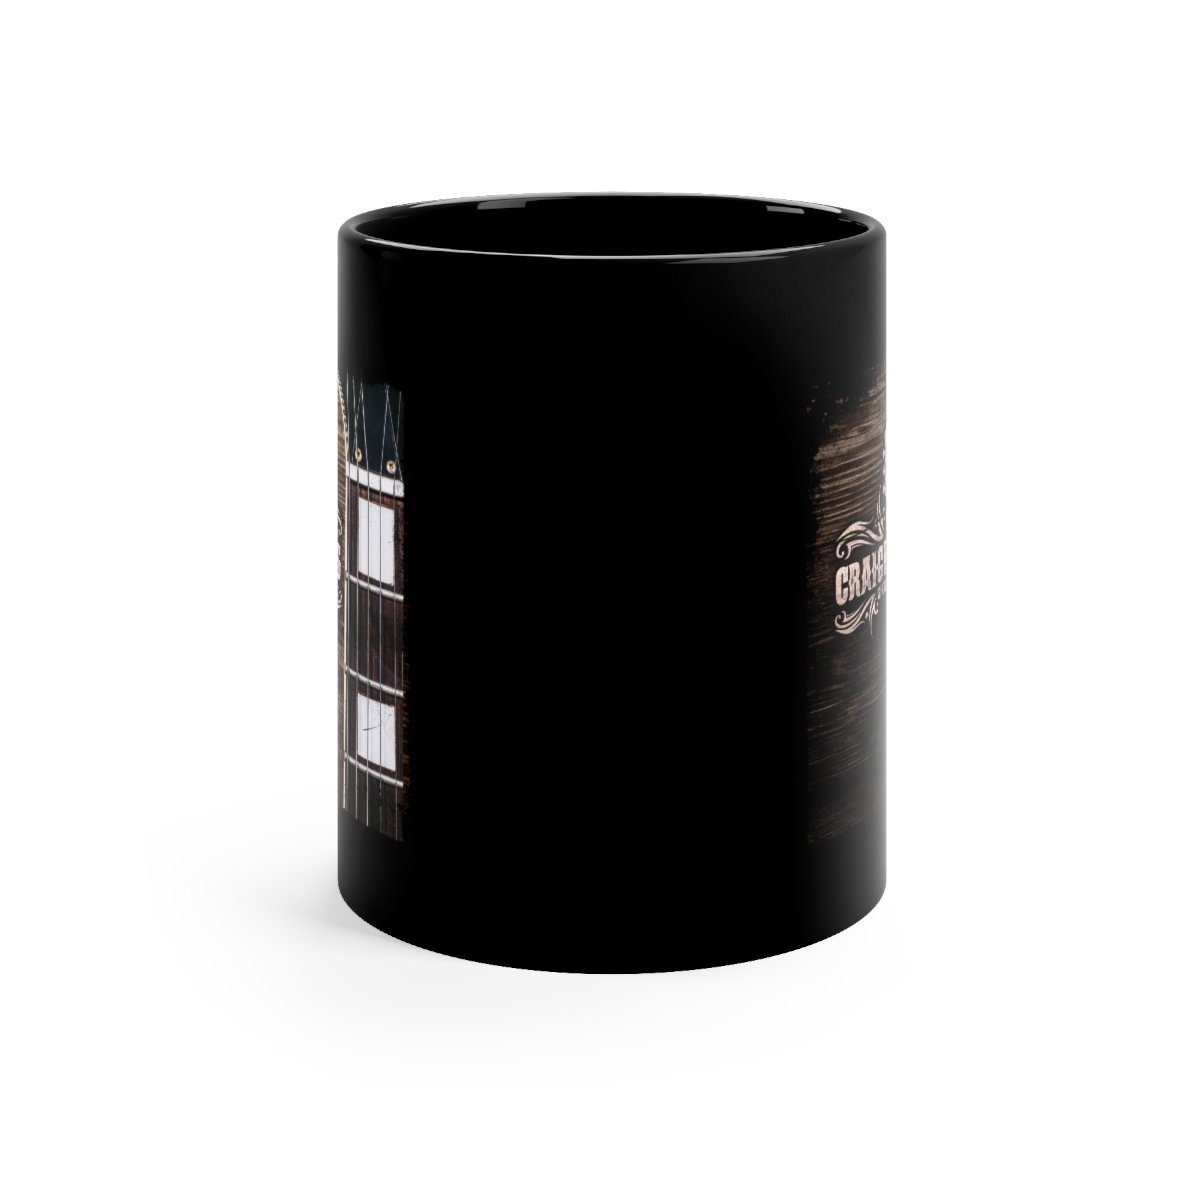 Craig Phillips – Short Supply 11oz Black mug